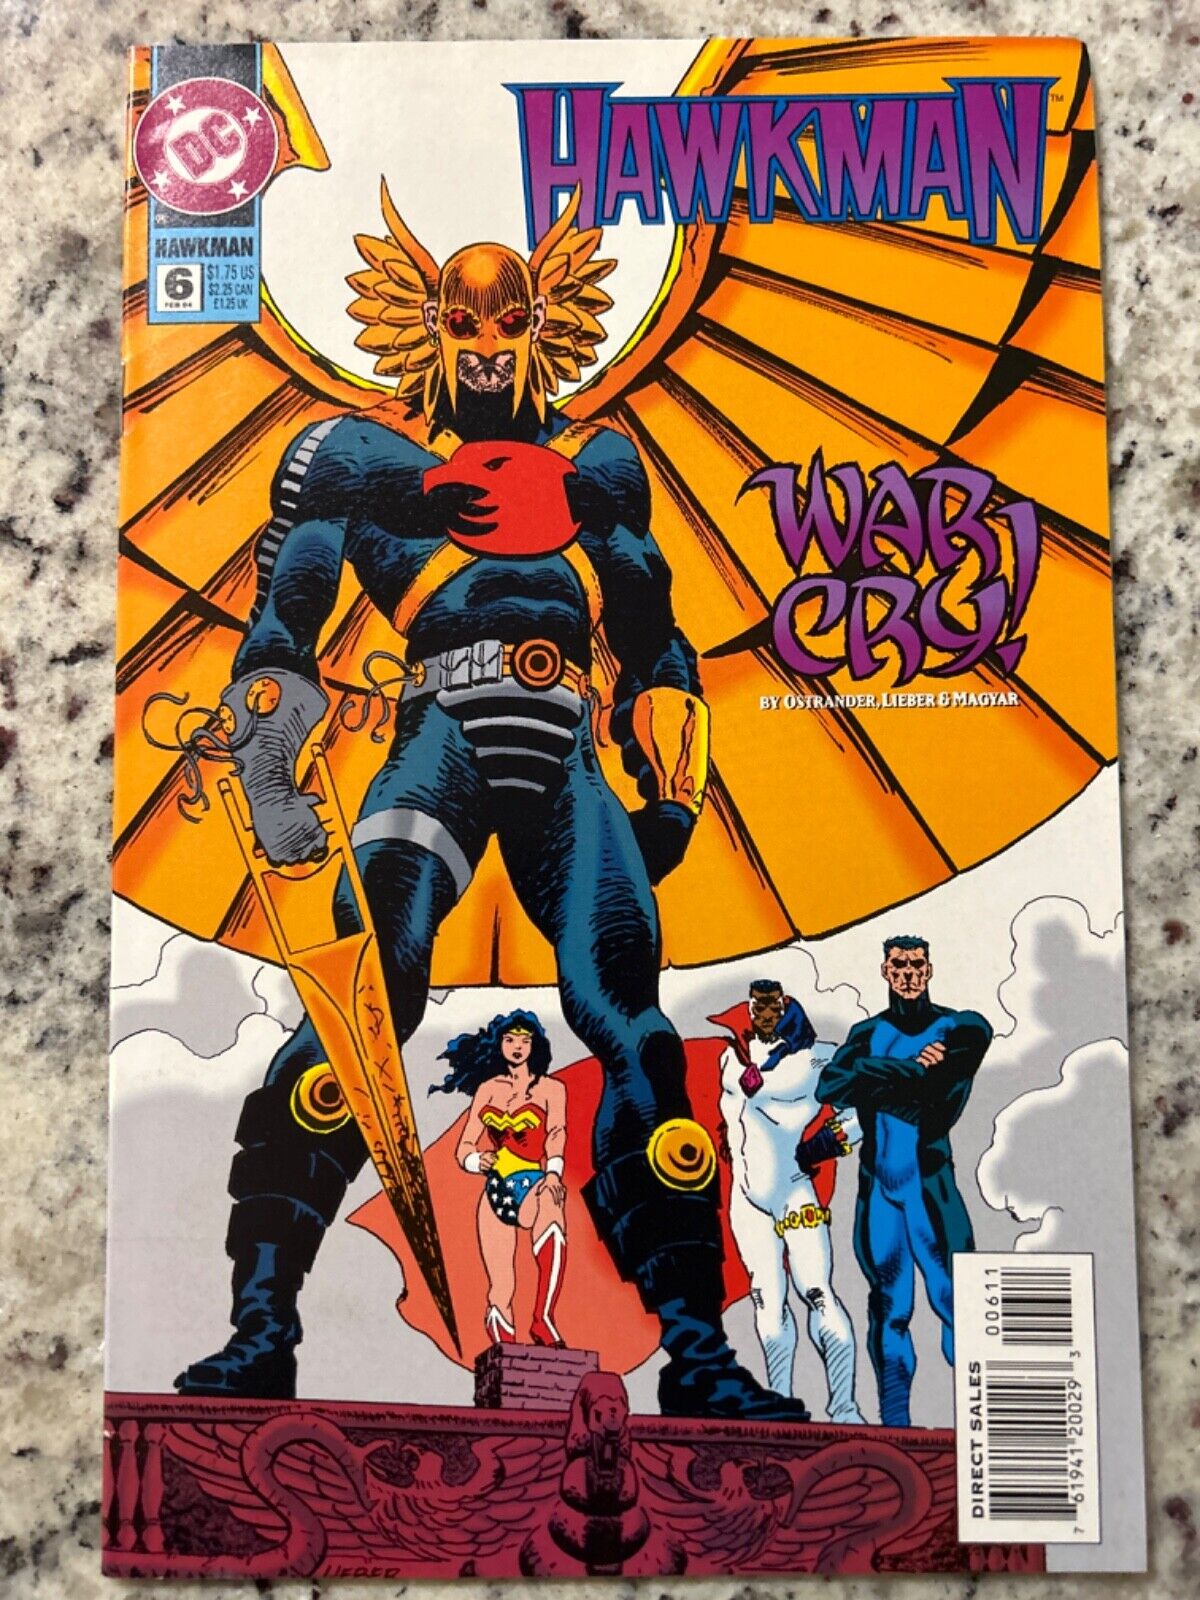 Hawkman #6 Vol. 3 (DC, 1994) vf